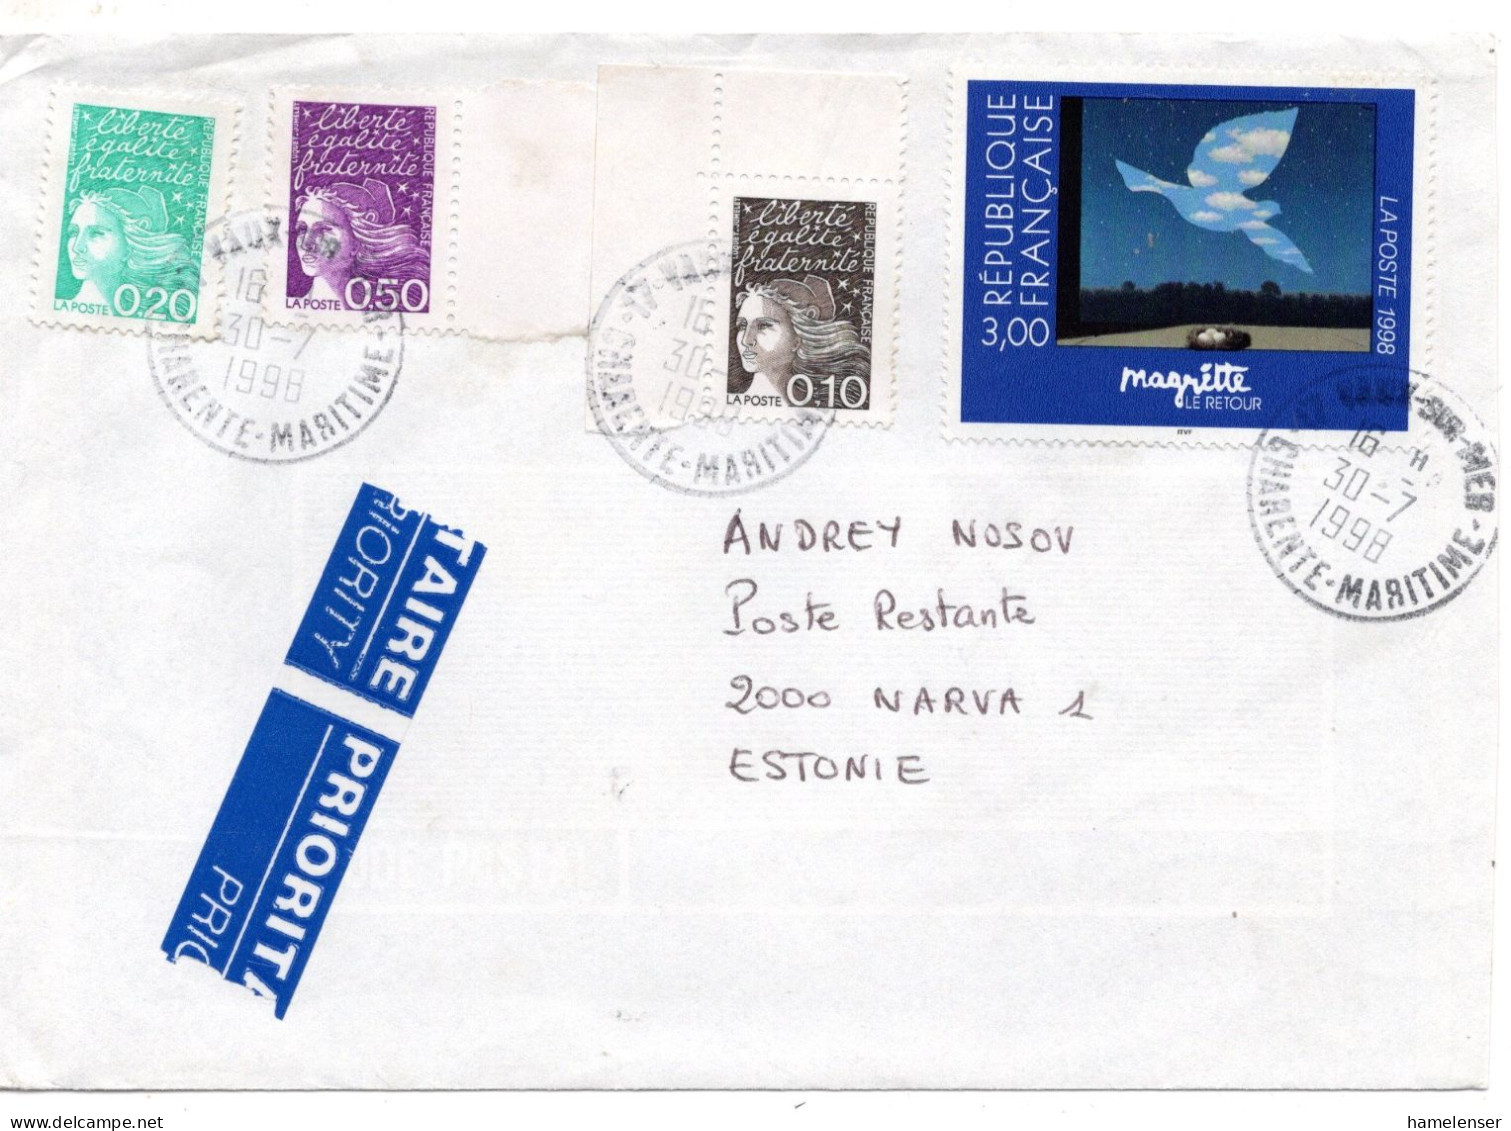 70901 - Frankreich - 1998 - 3,00F Magritte MiF A LpBf VAUX -> NARVA (Estland) - Covers & Documents